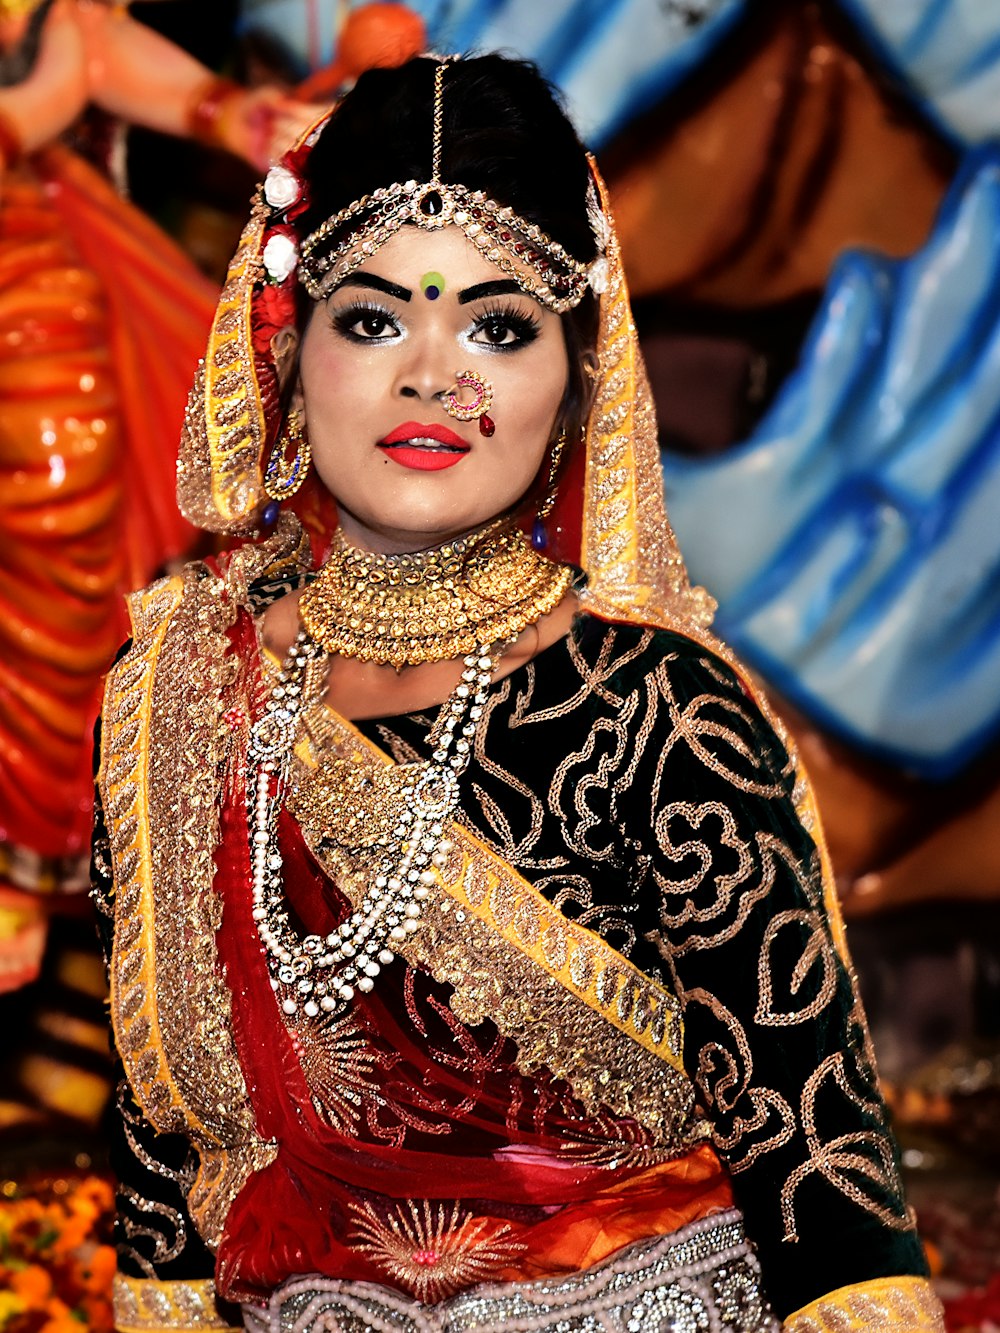 Femme en robe sari rouge et or